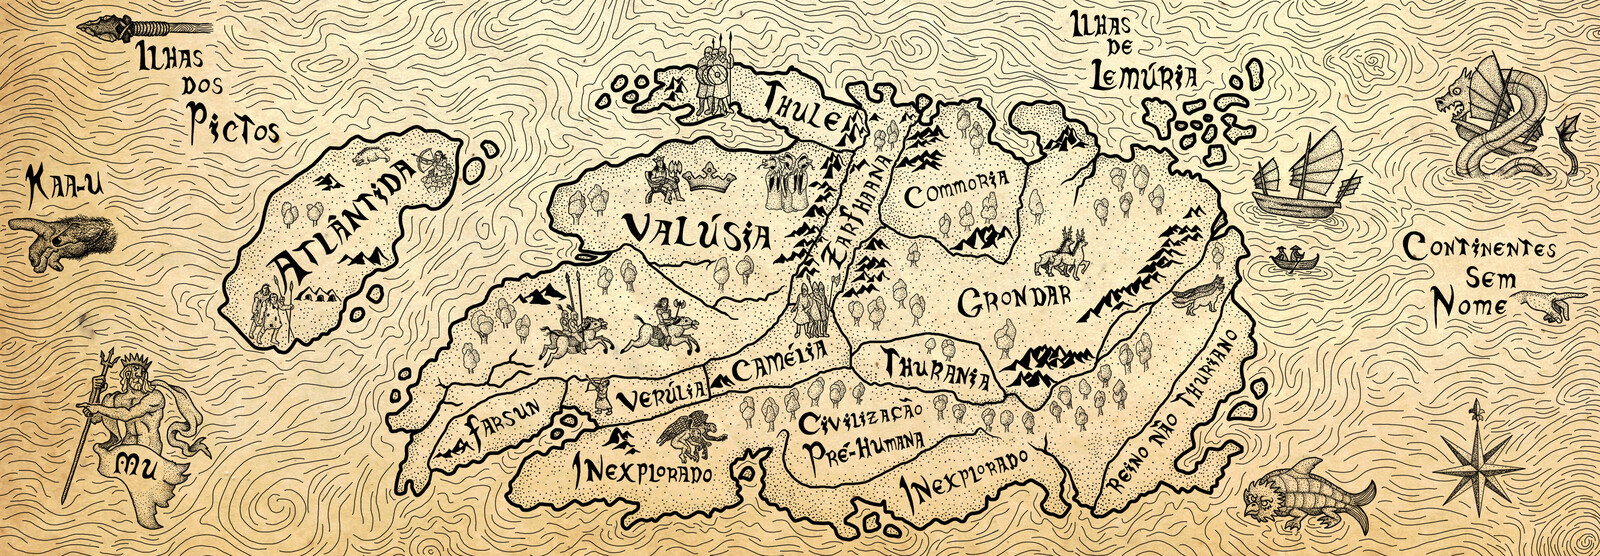 Mapa baseado na versão de Lin Carter | Map based on Lin Carter's version